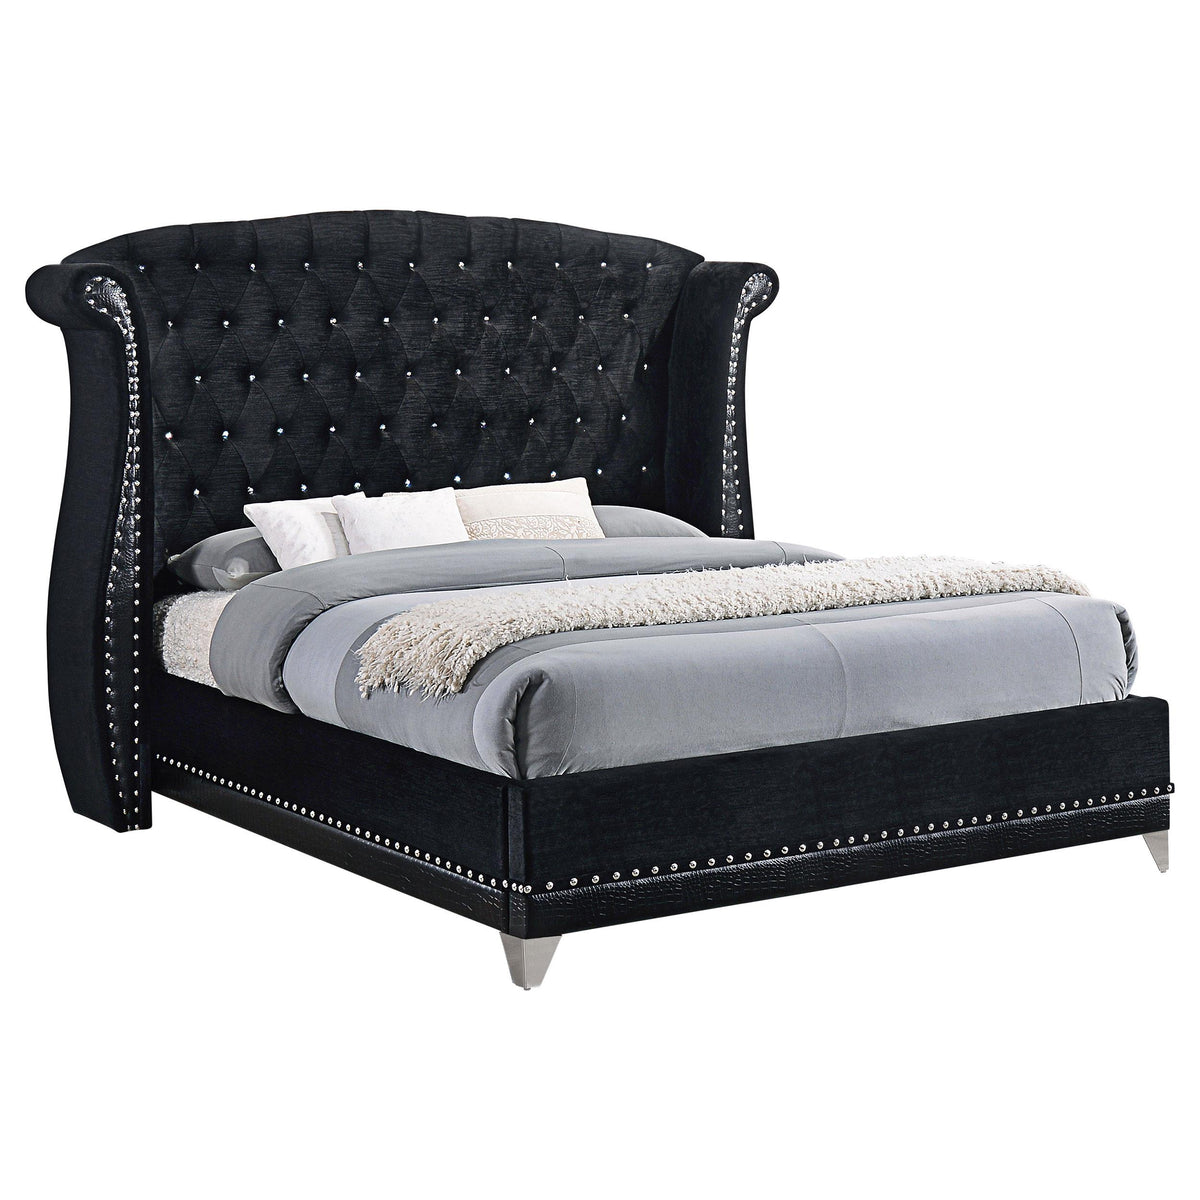 Barzini California King Tufted Upholstered Bed Black Barzini California King Tufted Upholstered Bed Black Half Price Furniture